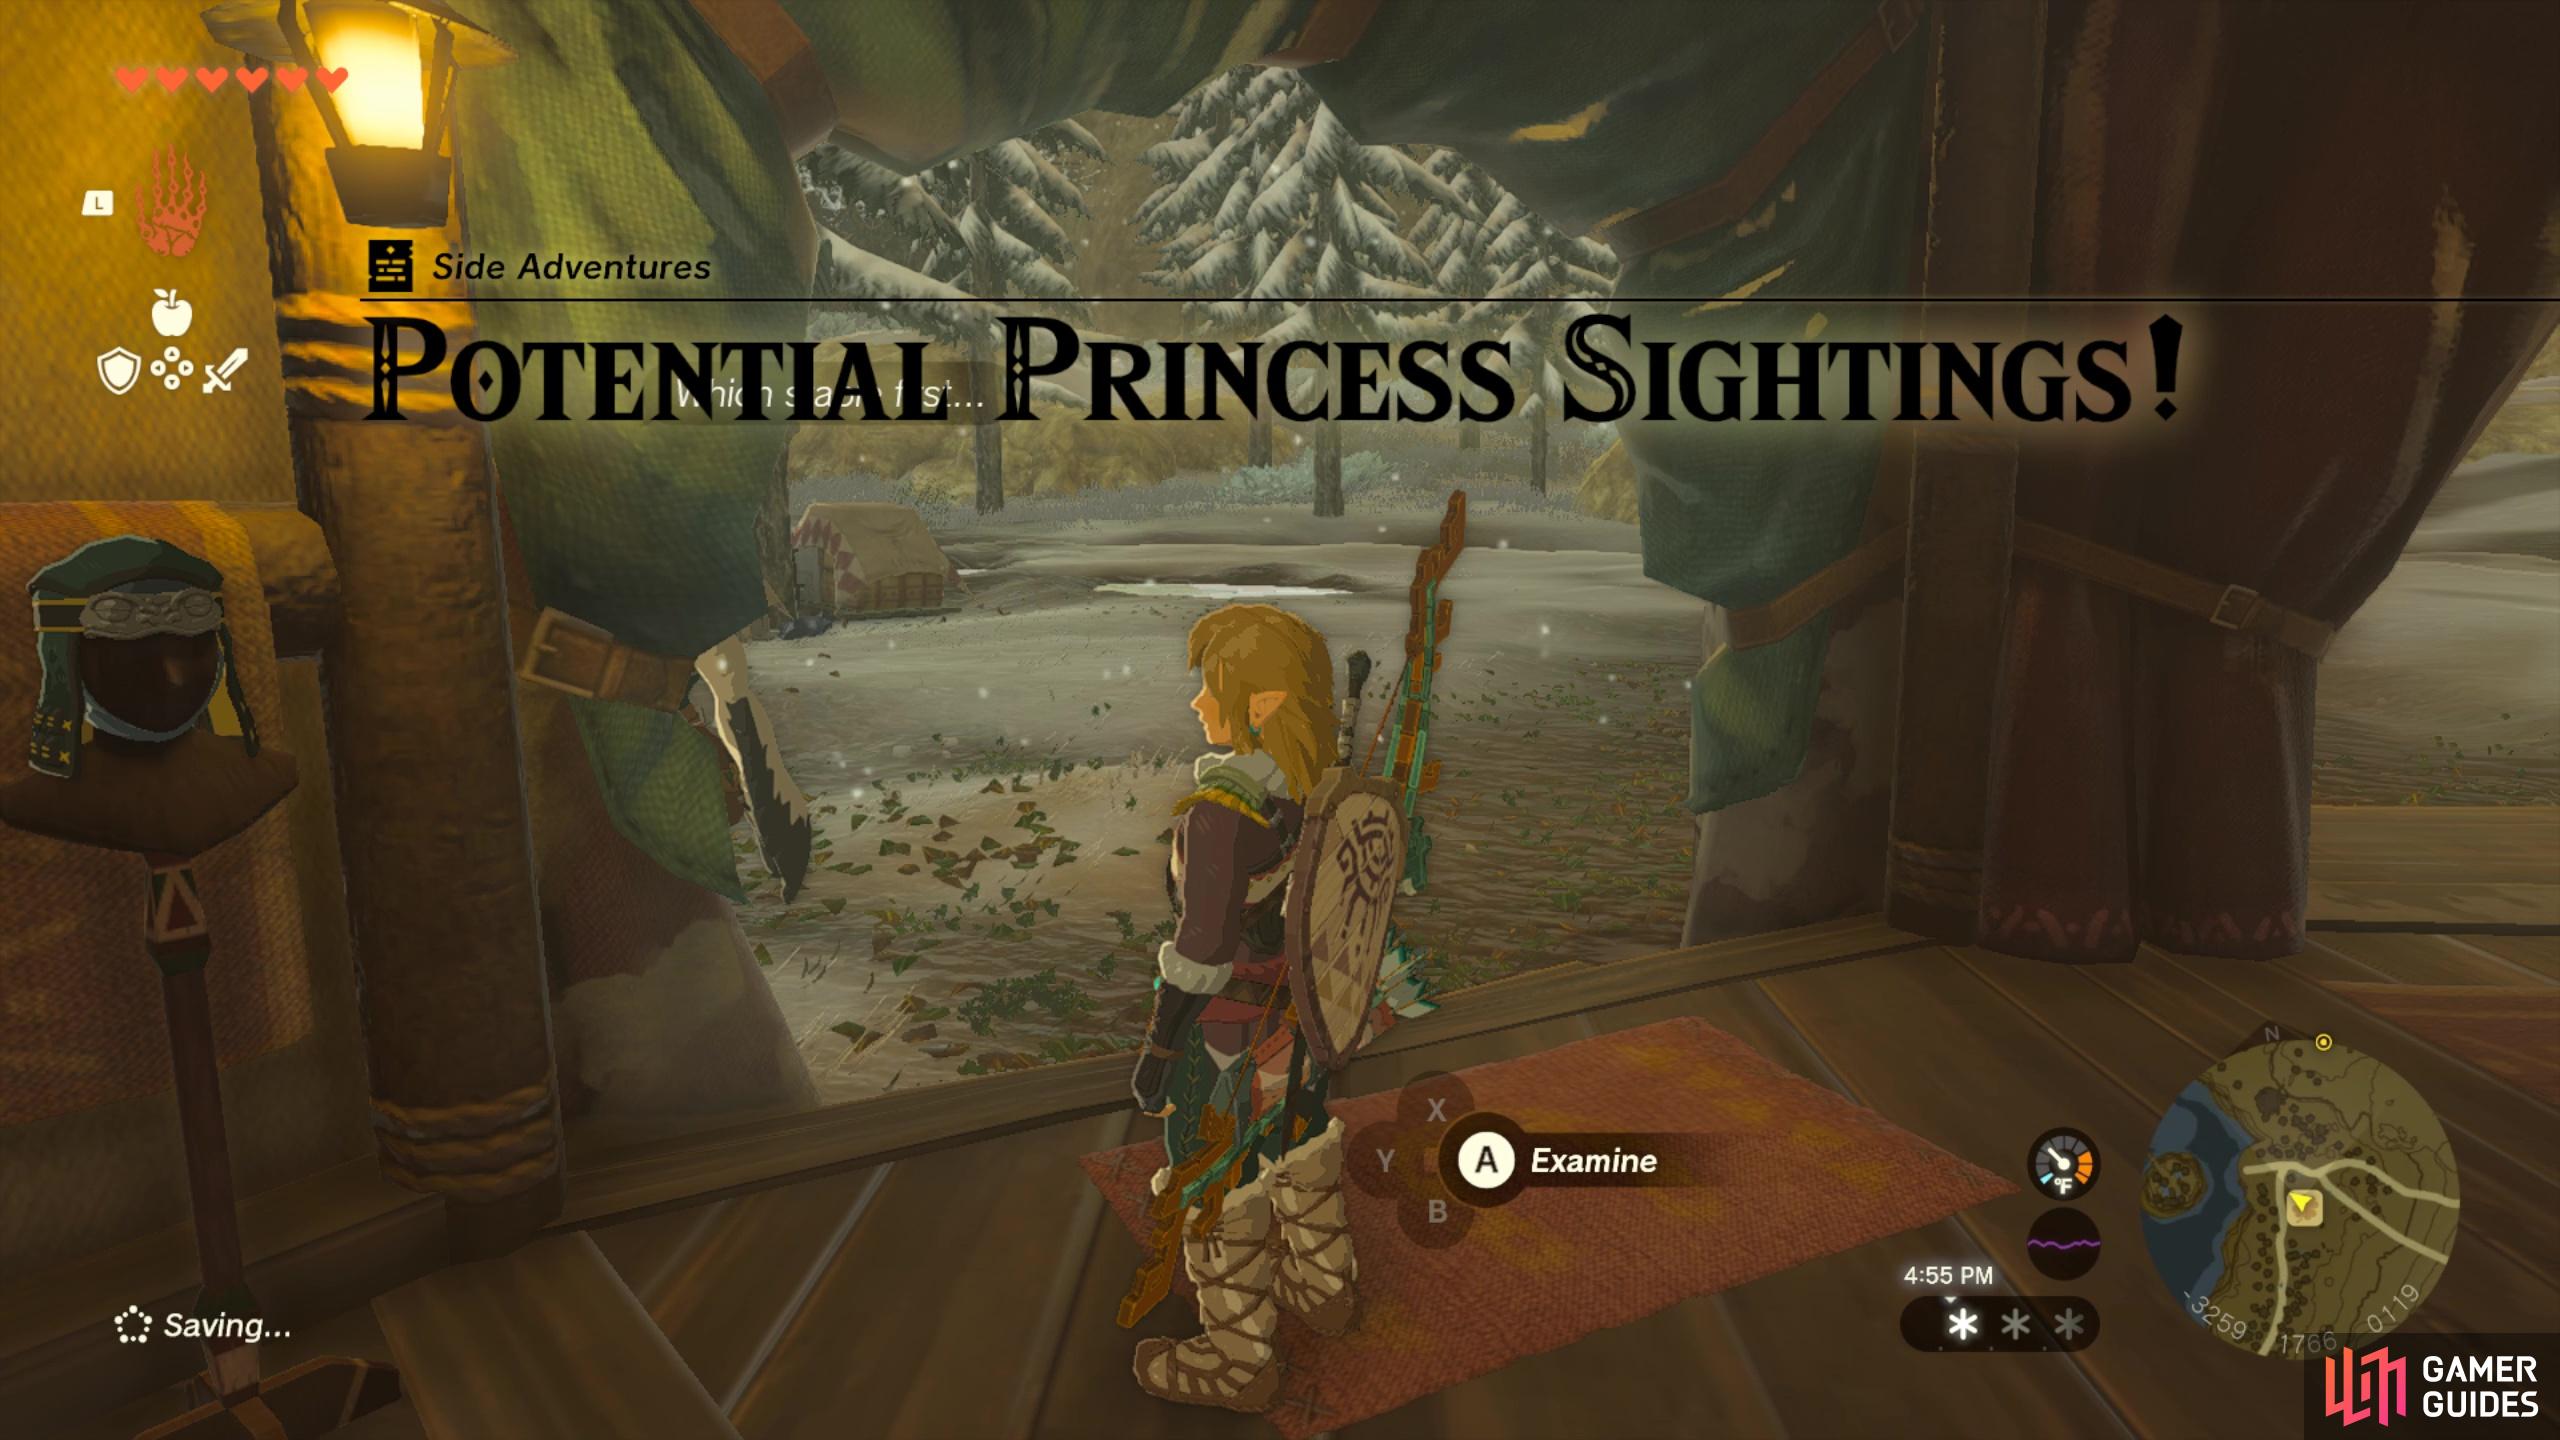 Potential Princess Sightings! Side Adventure. 